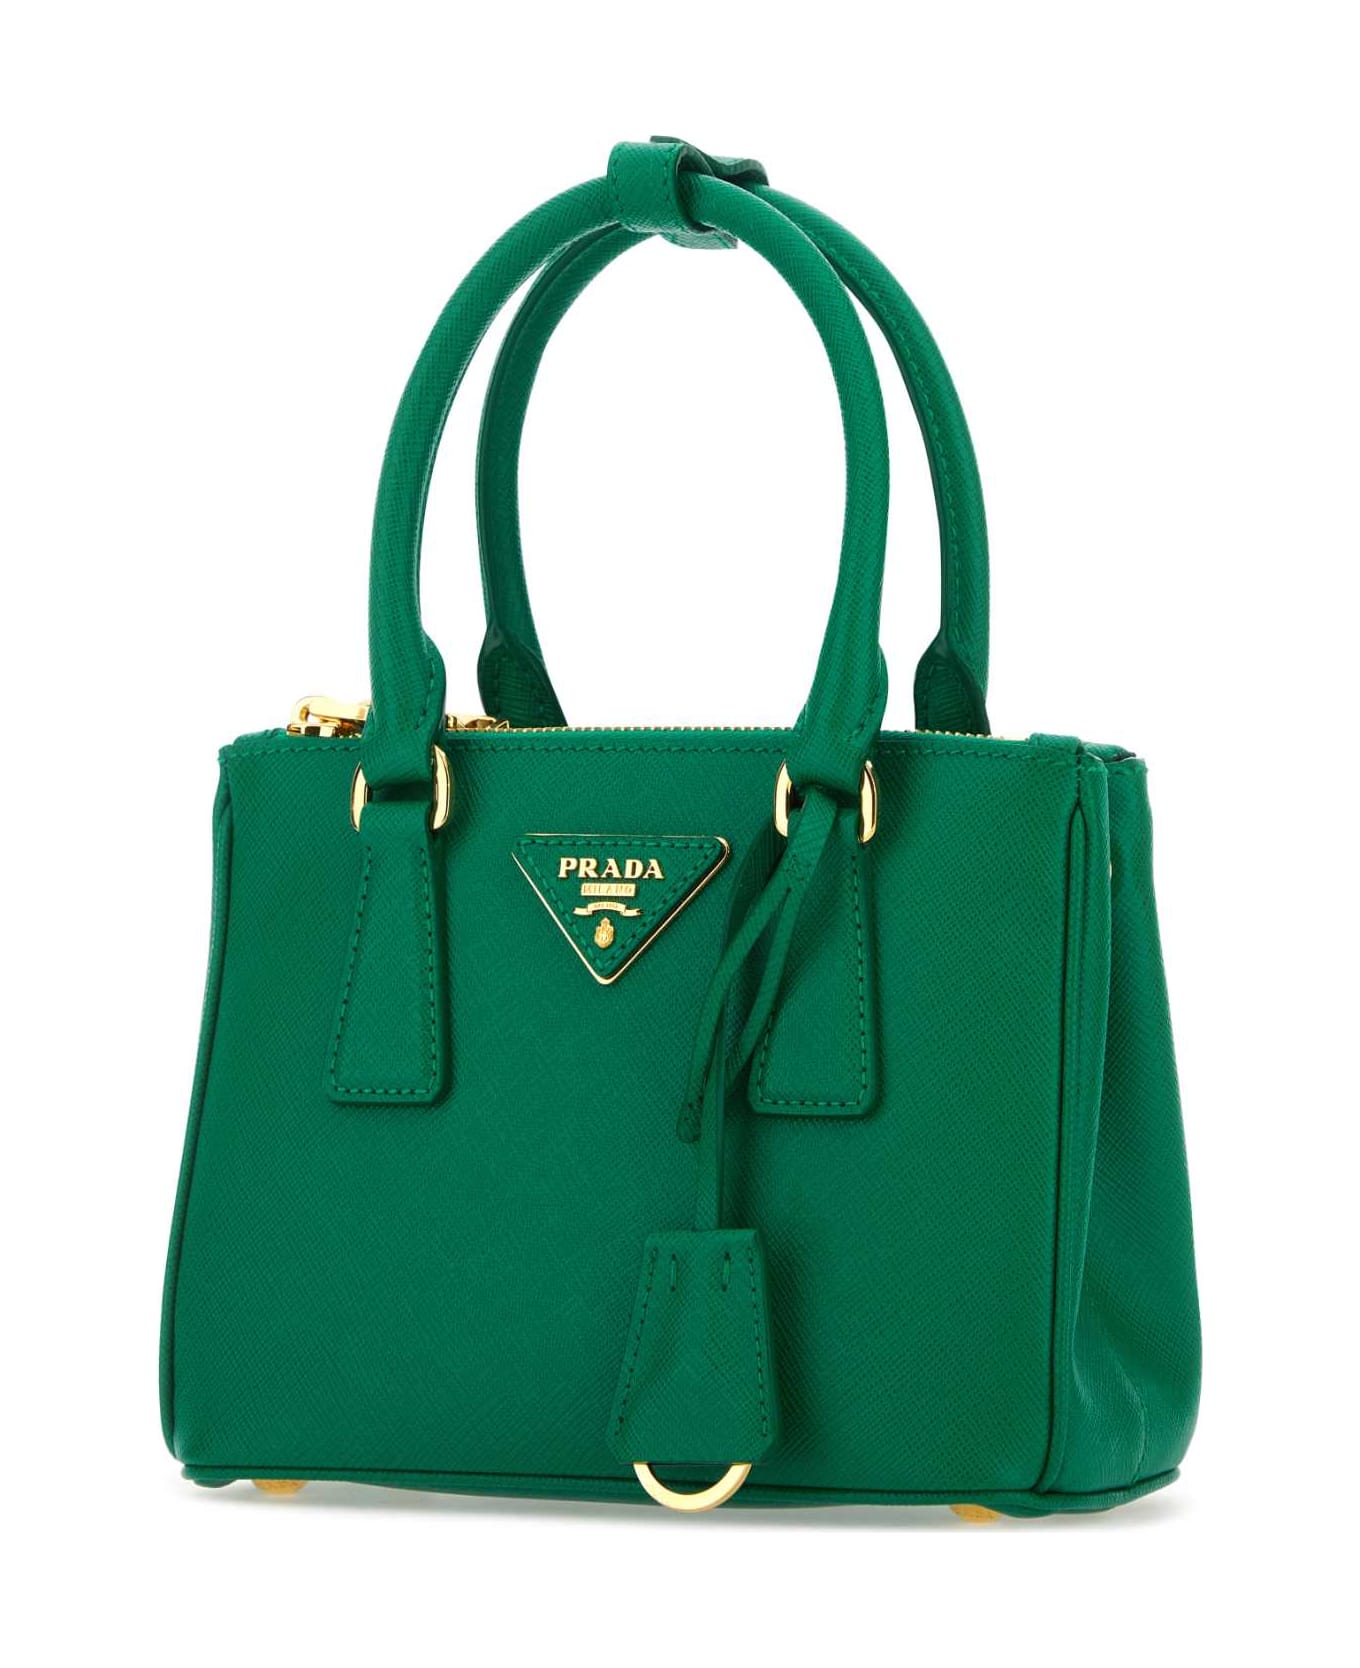 Prada Grass Green Leather Handbag - MANGO